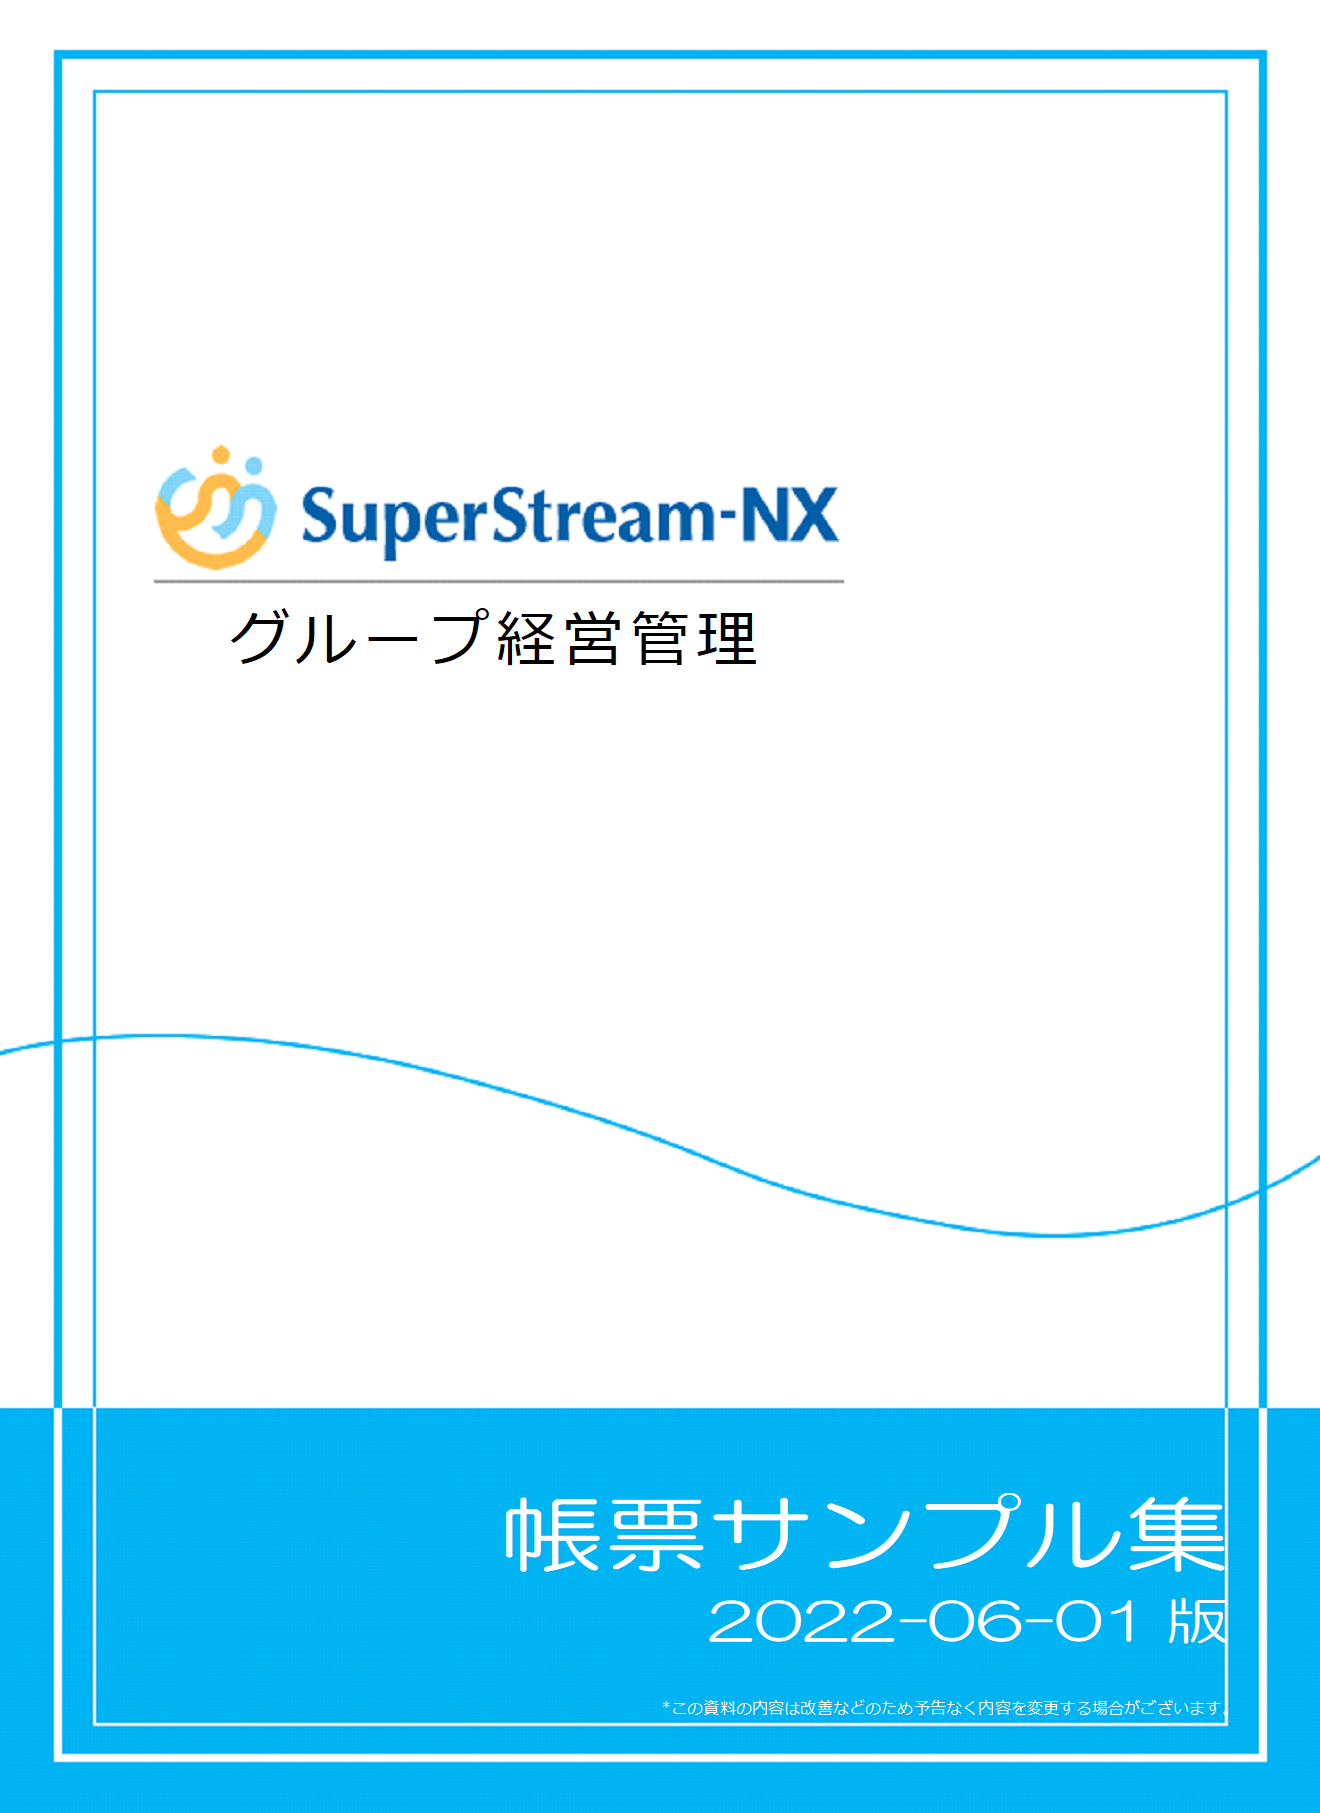 SuperStream-NX グループ経営管理帳票サンプル集